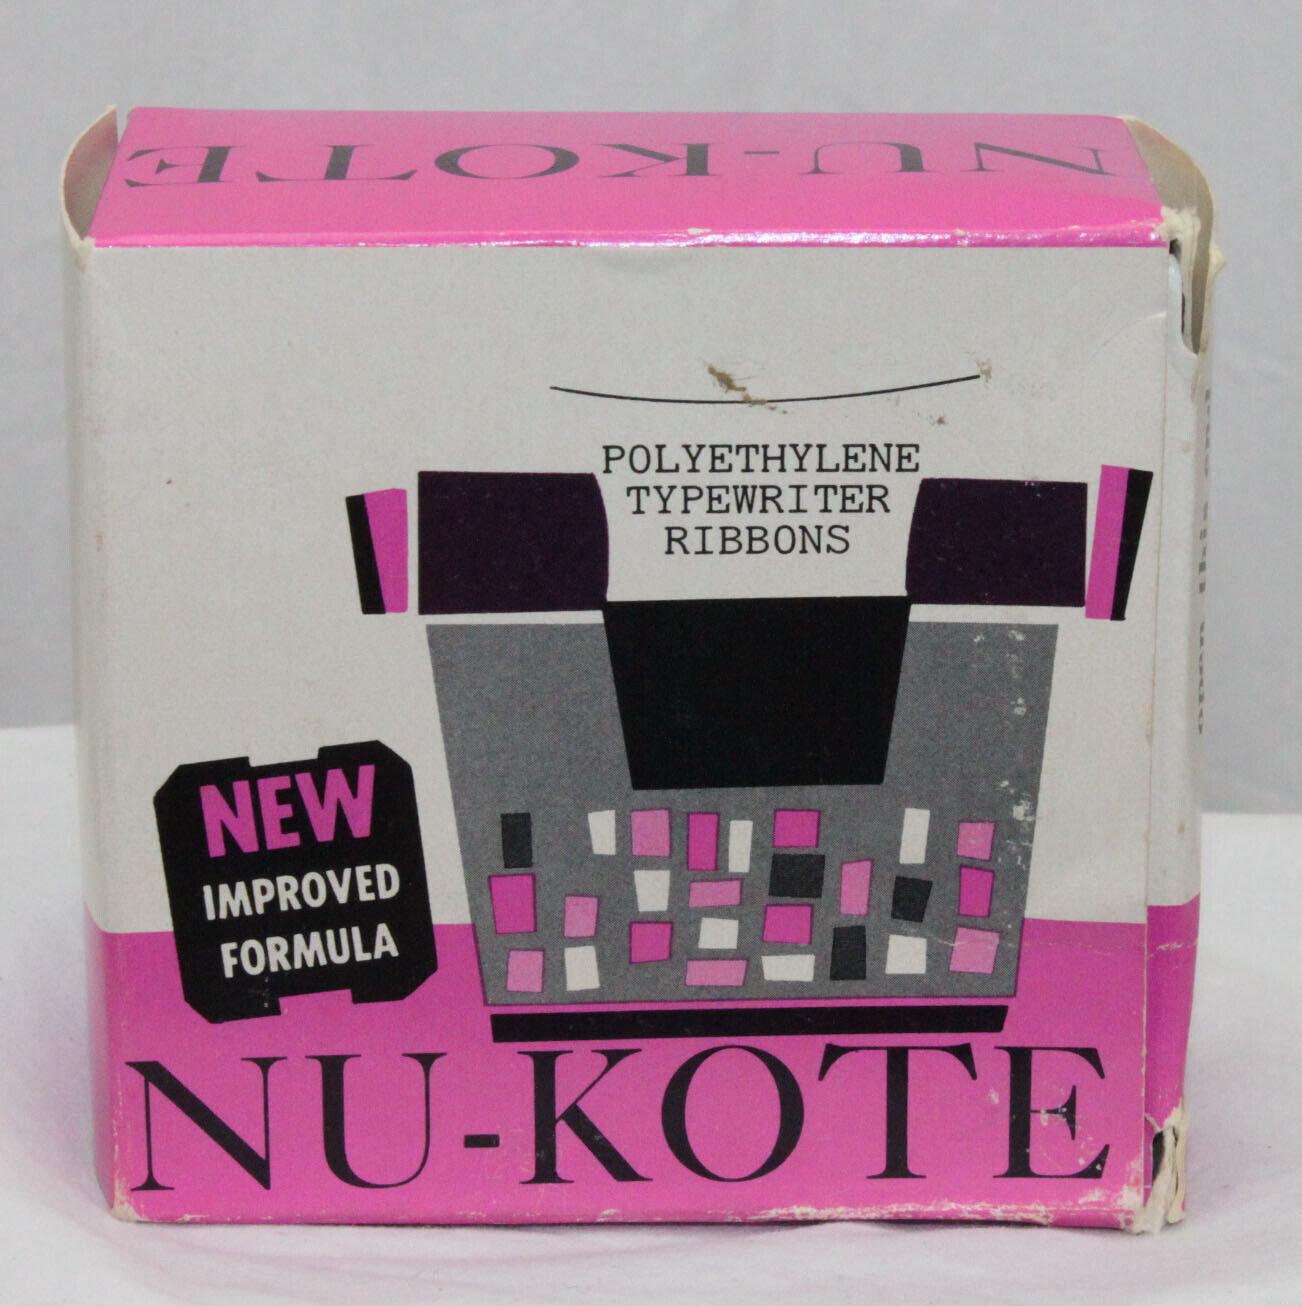 6 IBM NU-KOTE Black Film Typewriter Ribbons B42 Polyethylene Vintage in Box